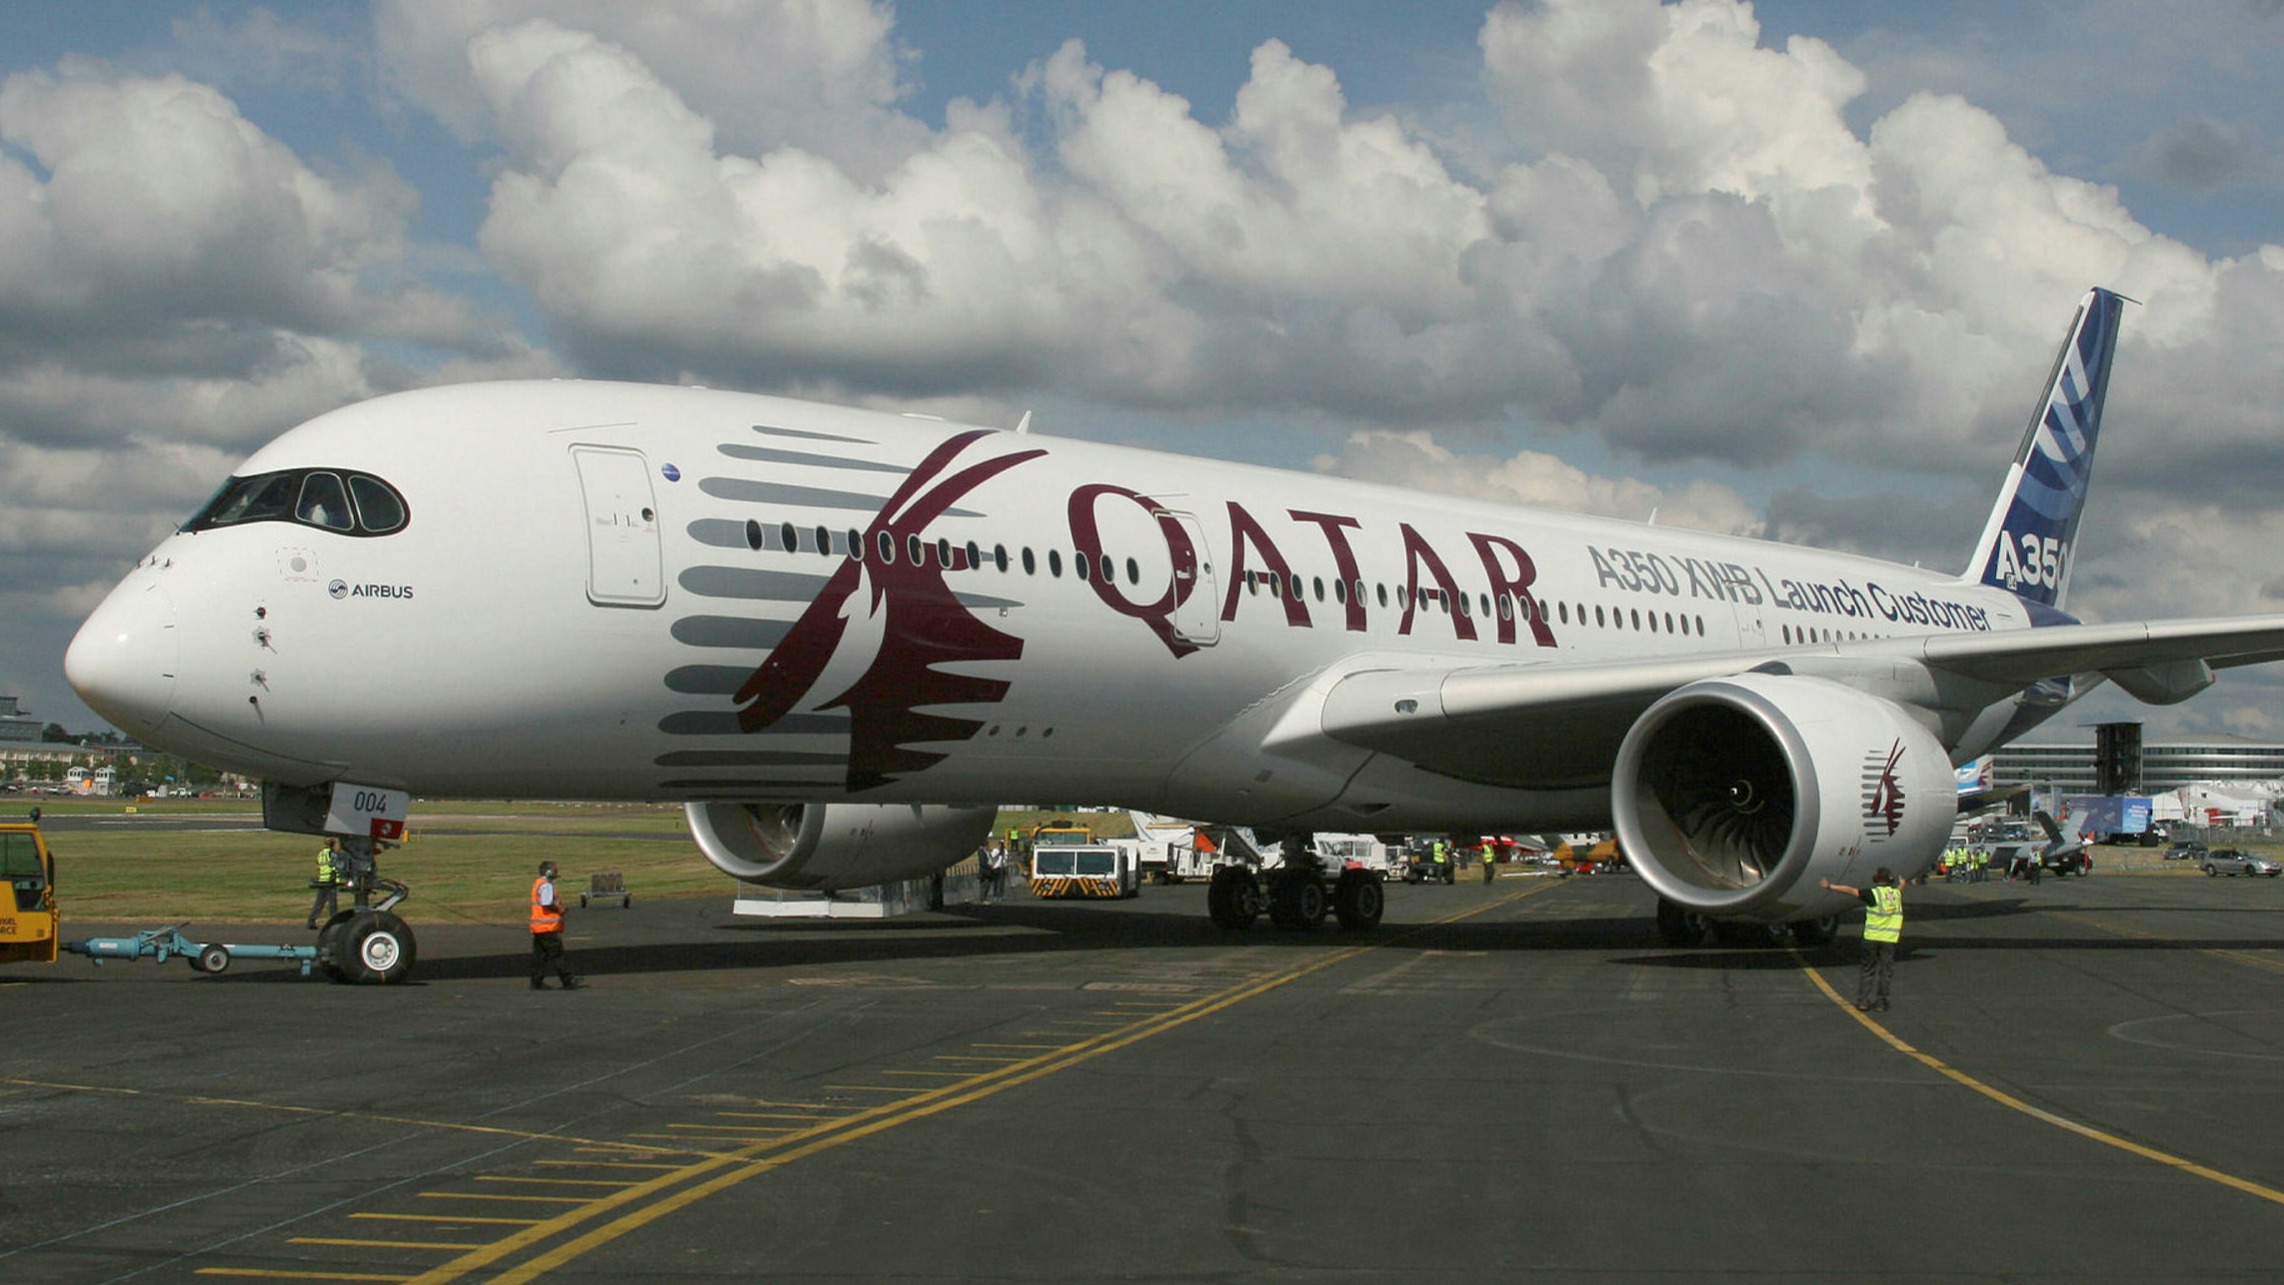 terrible vacation destinations  - qatar airways - Qatar 135